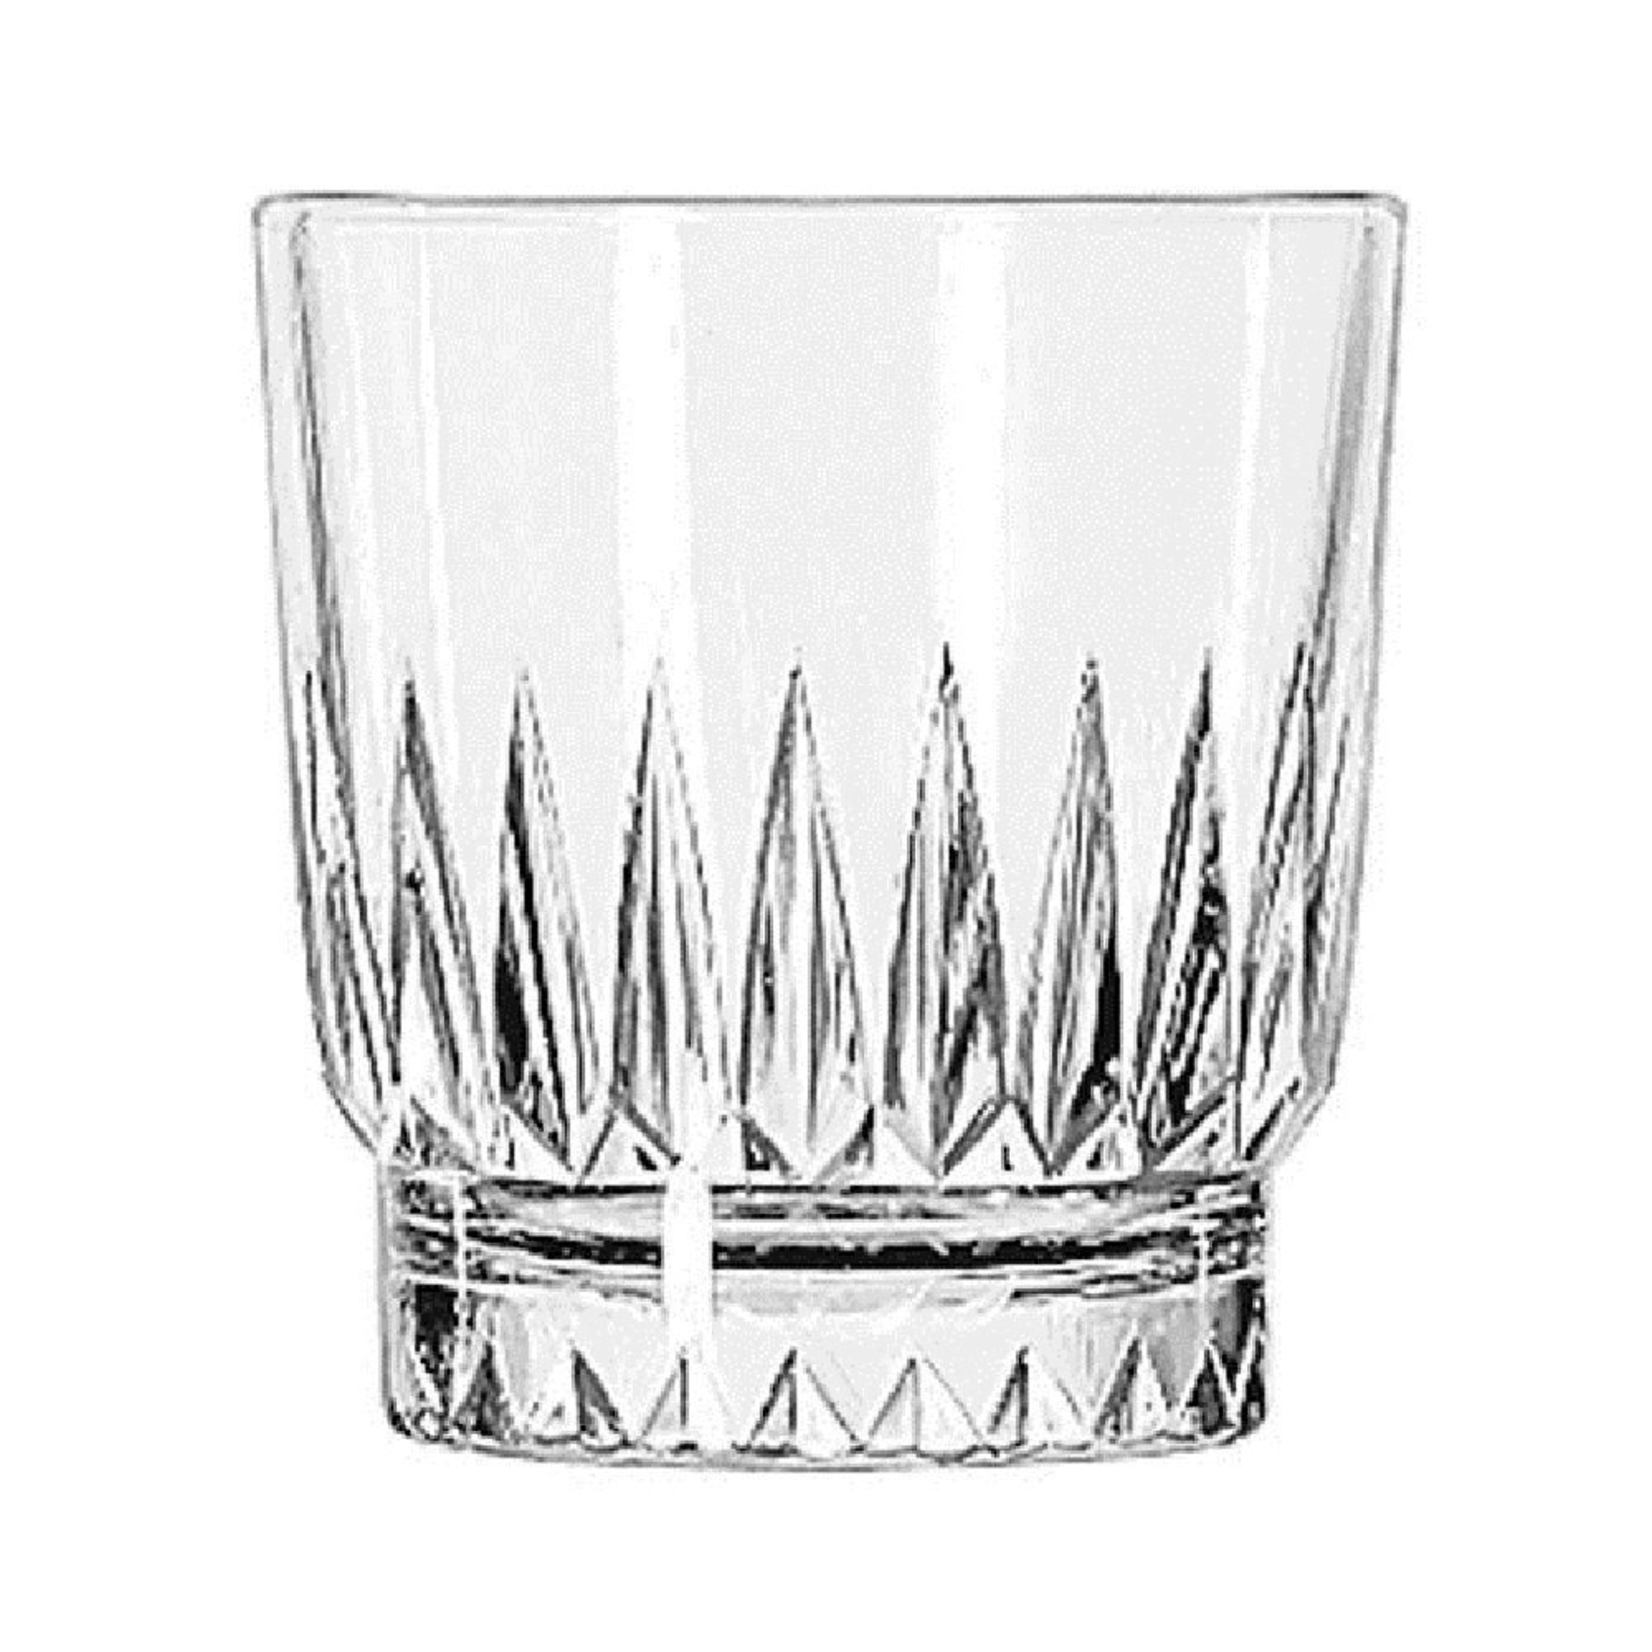 SOUTHWEST GLASSWARE Special order 15454 Libbey 8 oz Winchester Rocks Glass 36/cs